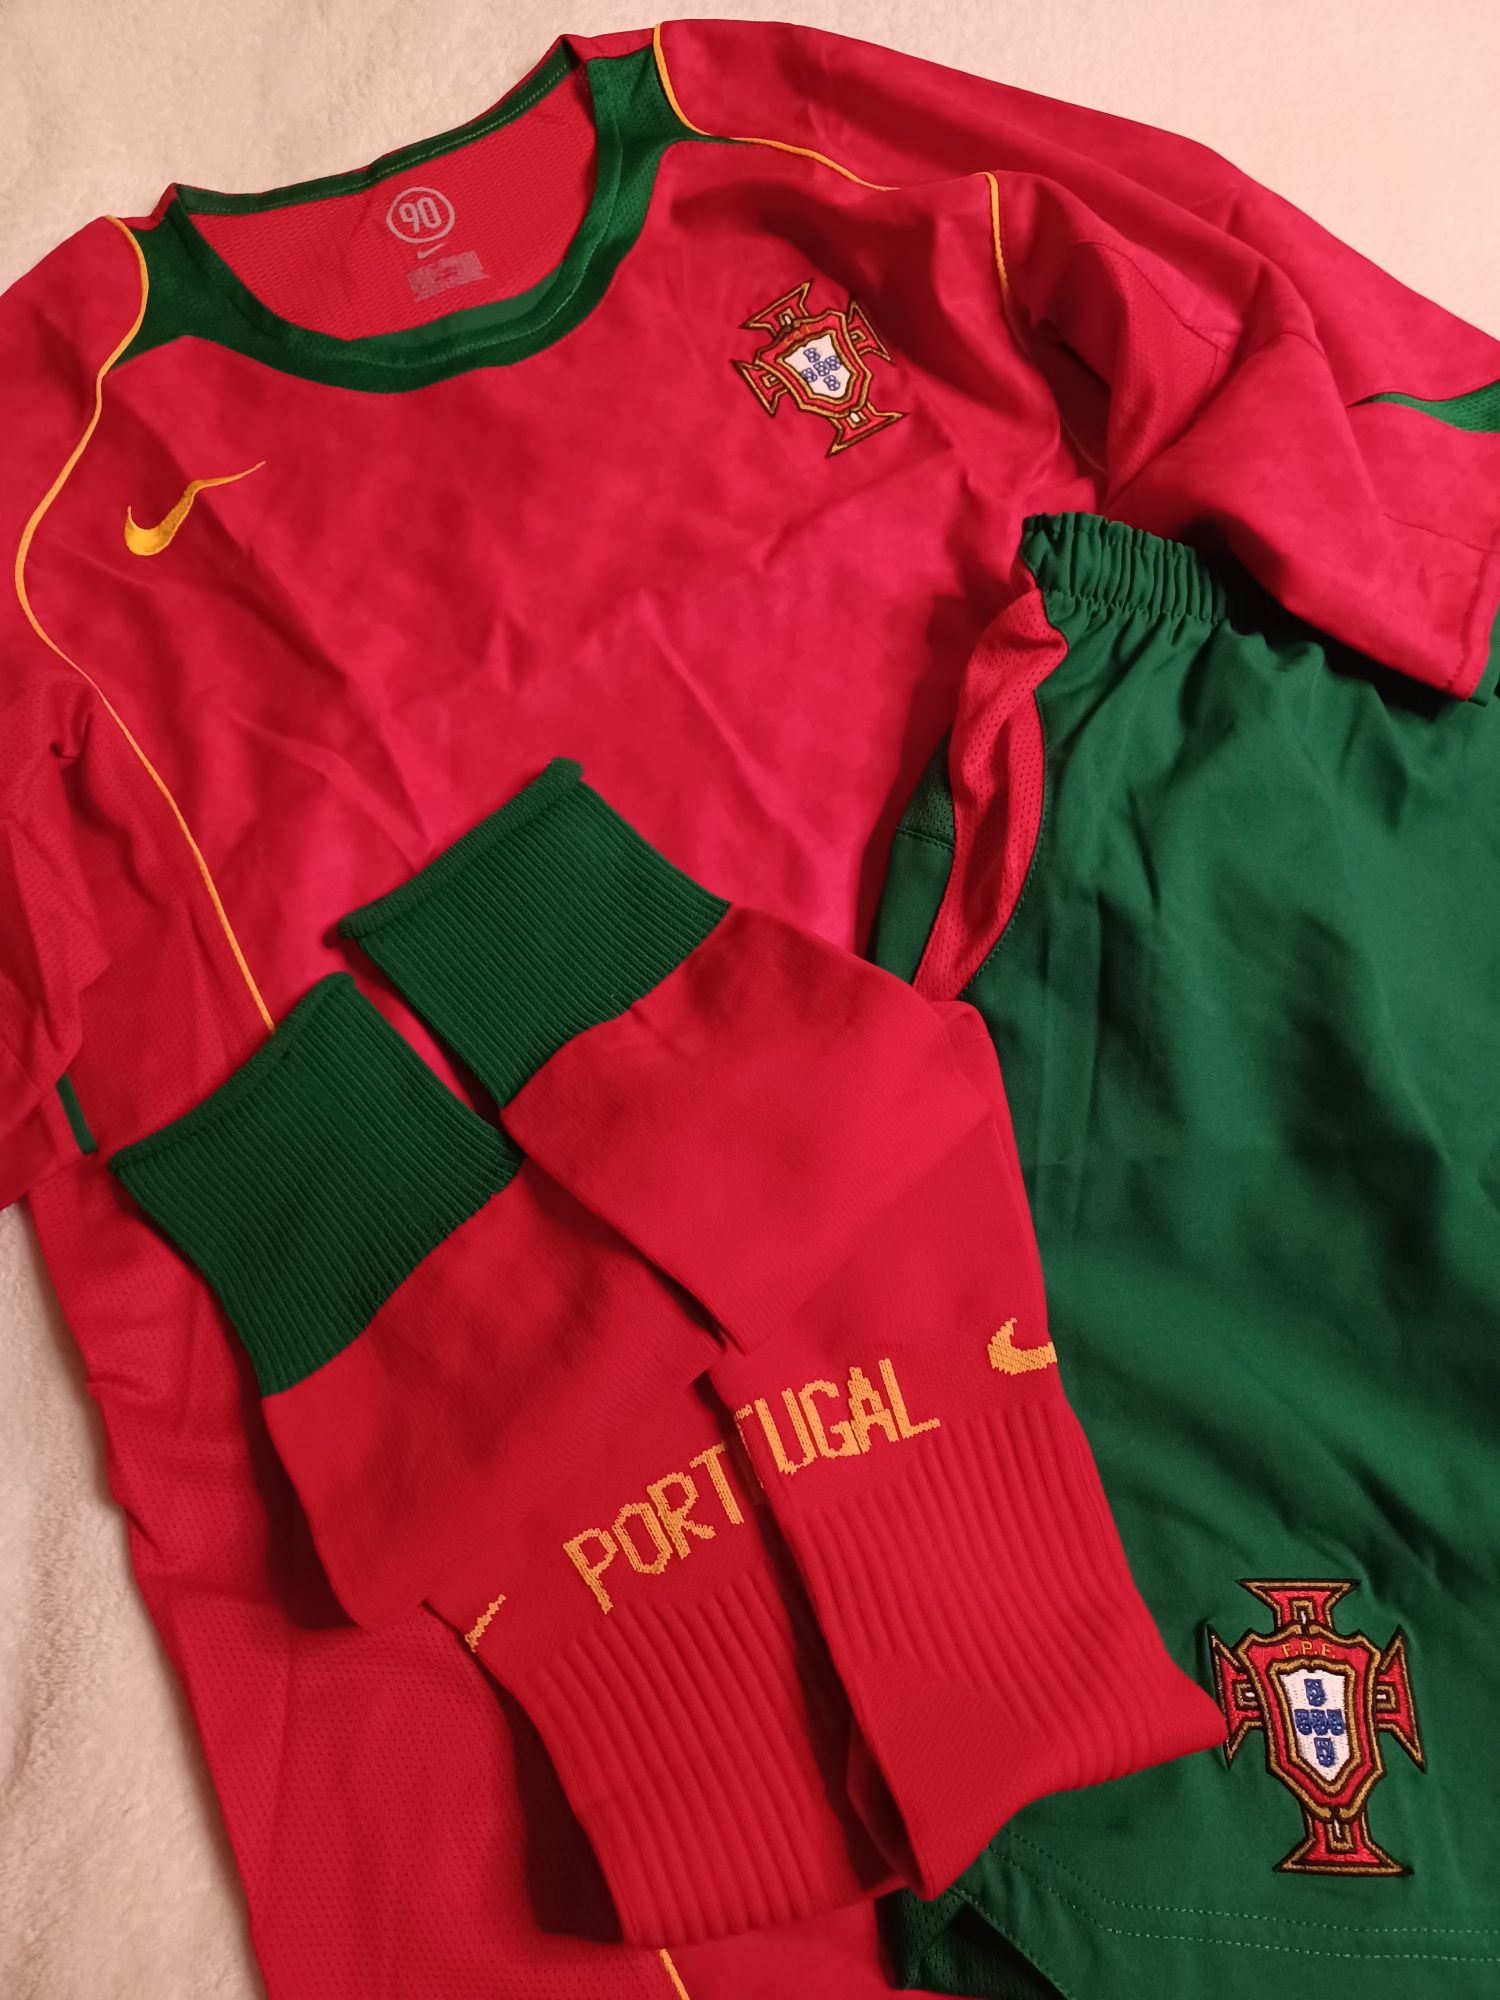 Equipamento Oficial de Portugal 2004/2006 (completo)